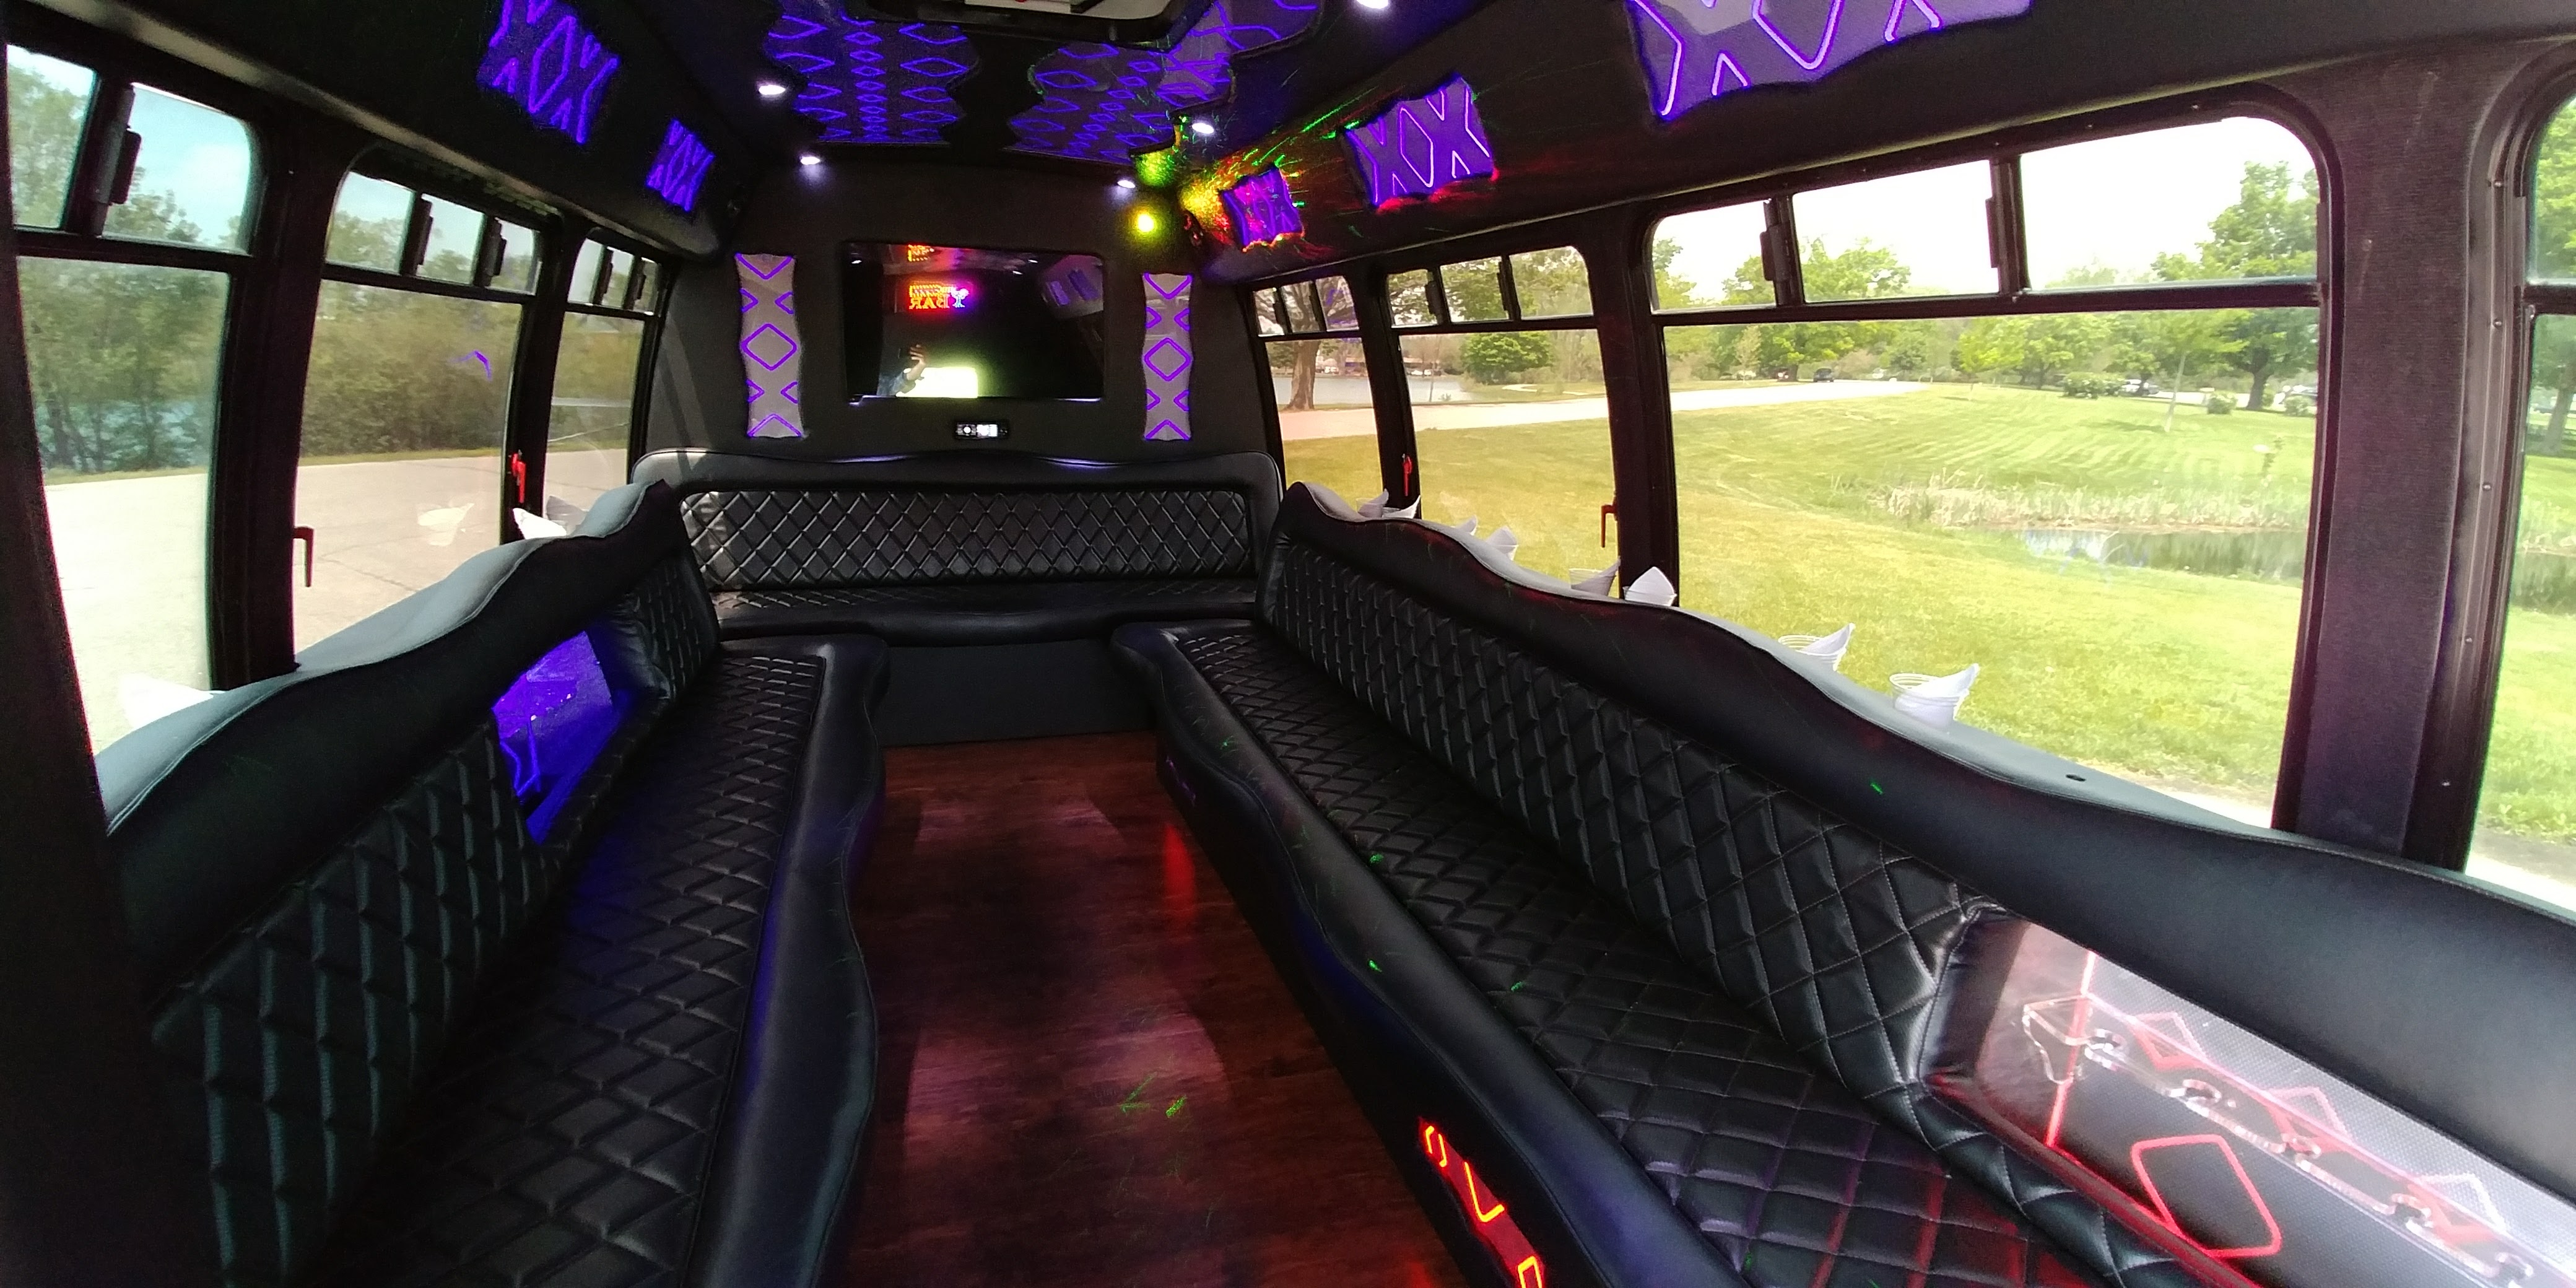 22-3 Passenger Luxury Limo Bus Interior 1